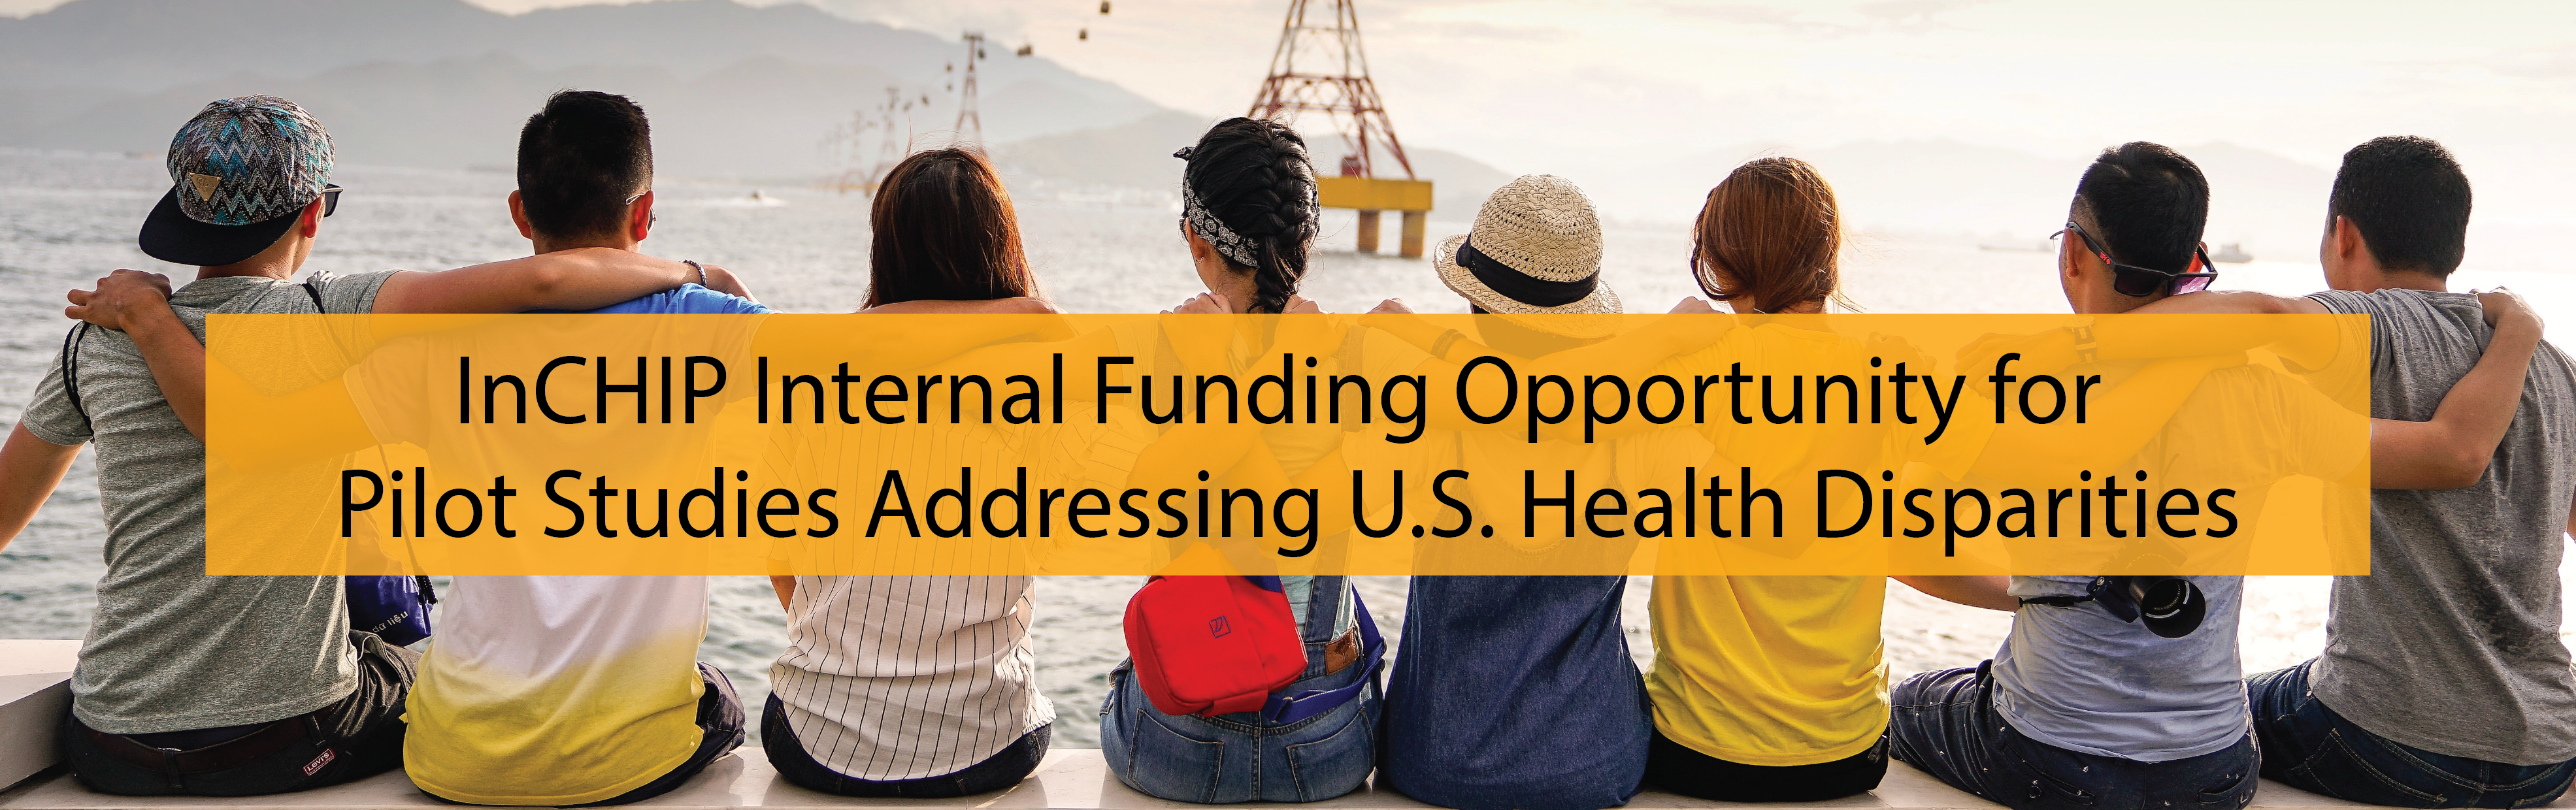 InCHIP Internal Funding Opportunity for Pilot Studies Addressing U.S. Health Disparities